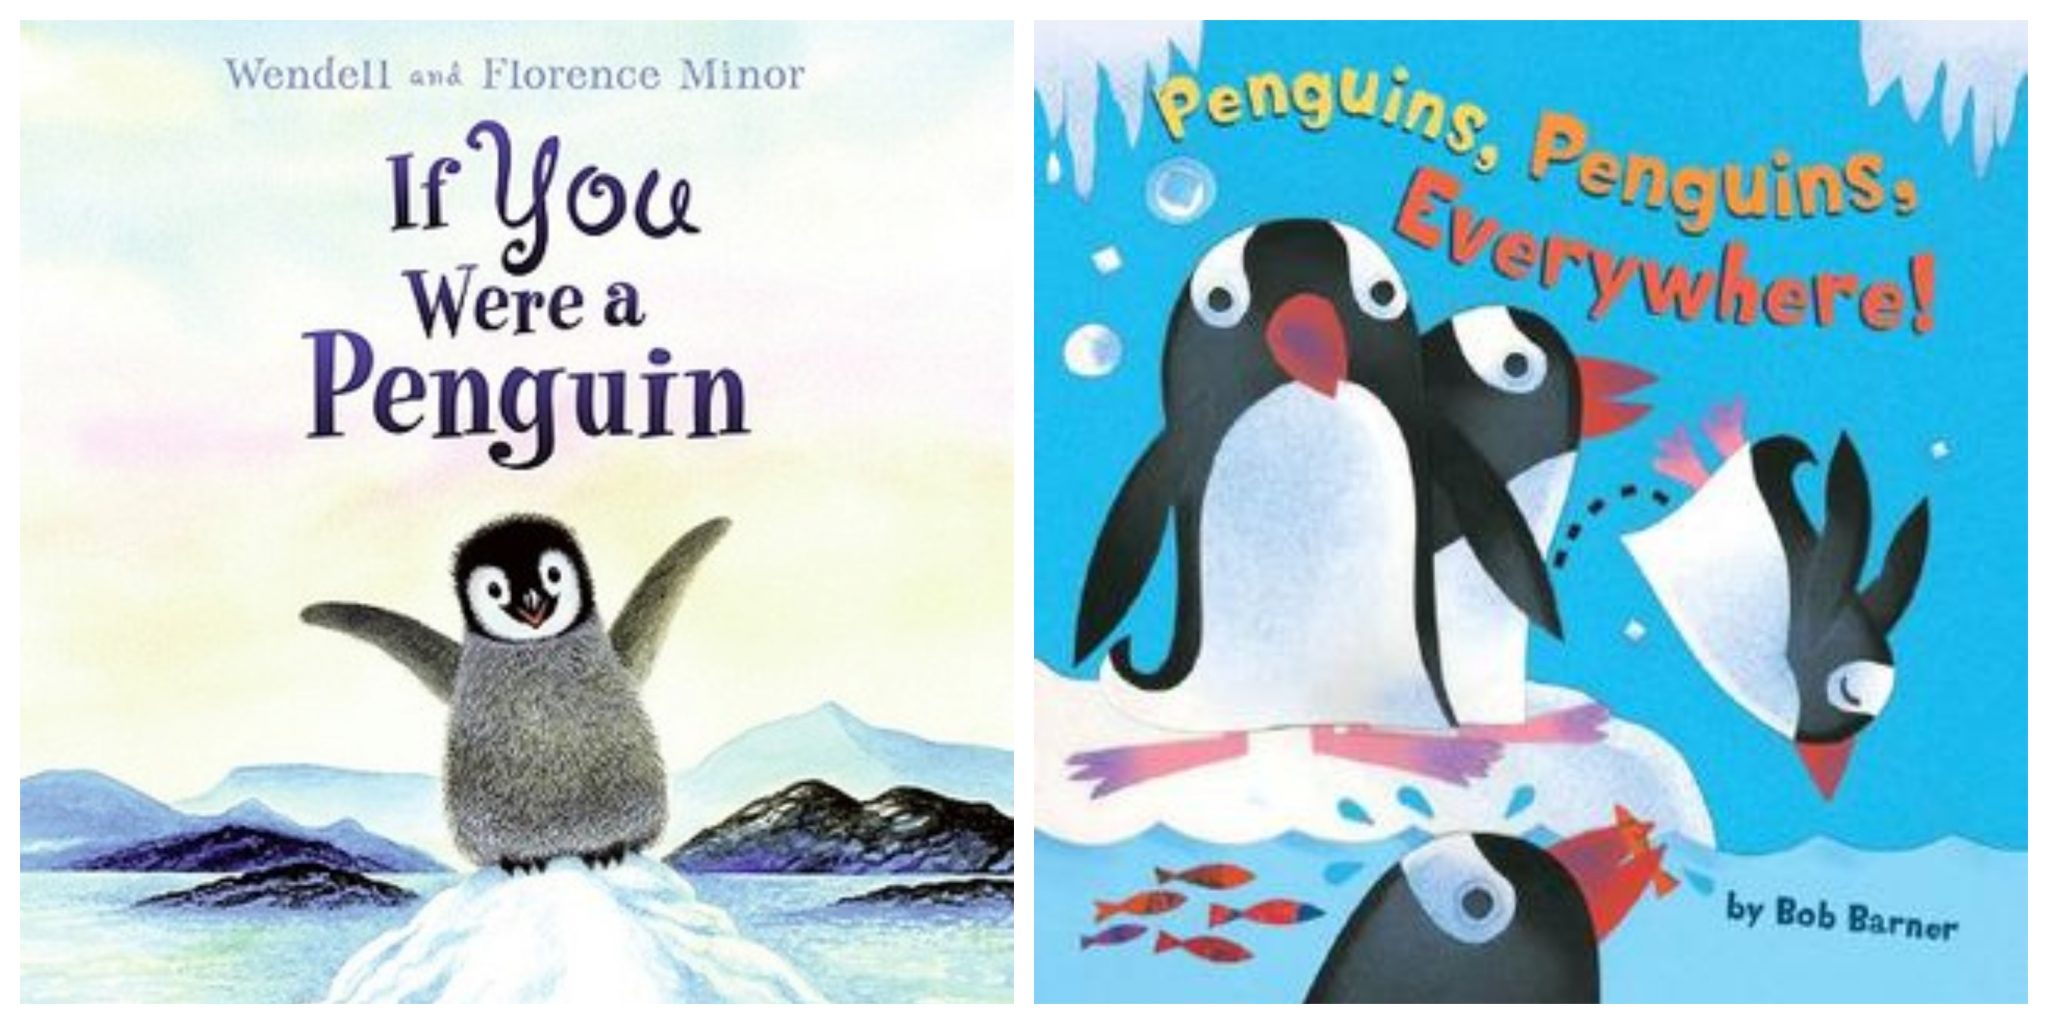 Penguins, Penguins, Everywhere! by Bob Barner